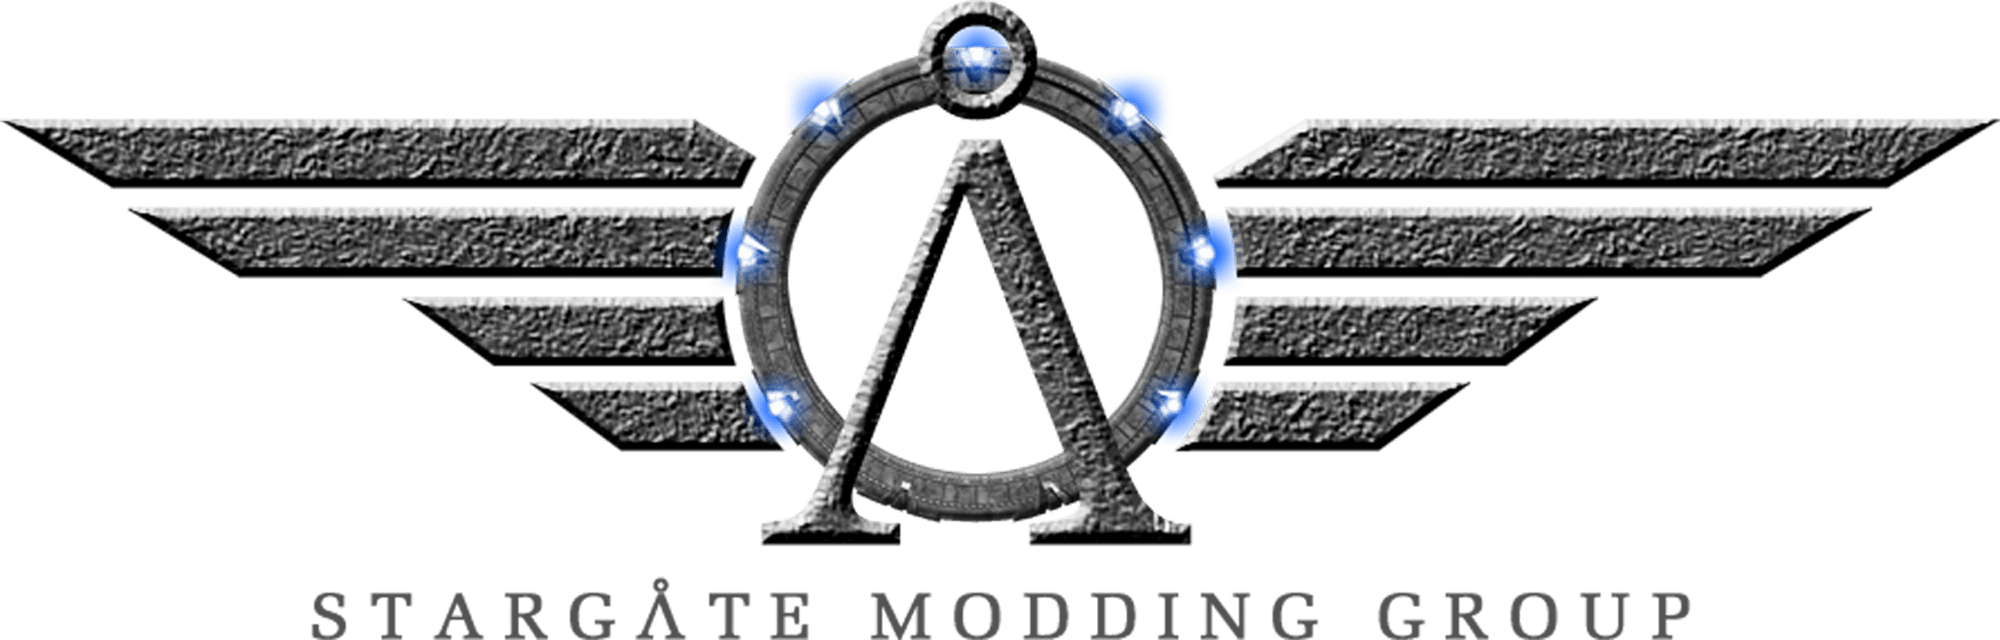 Sgmg Logo Min - Stargate Modding Group (2000x640), Png Download